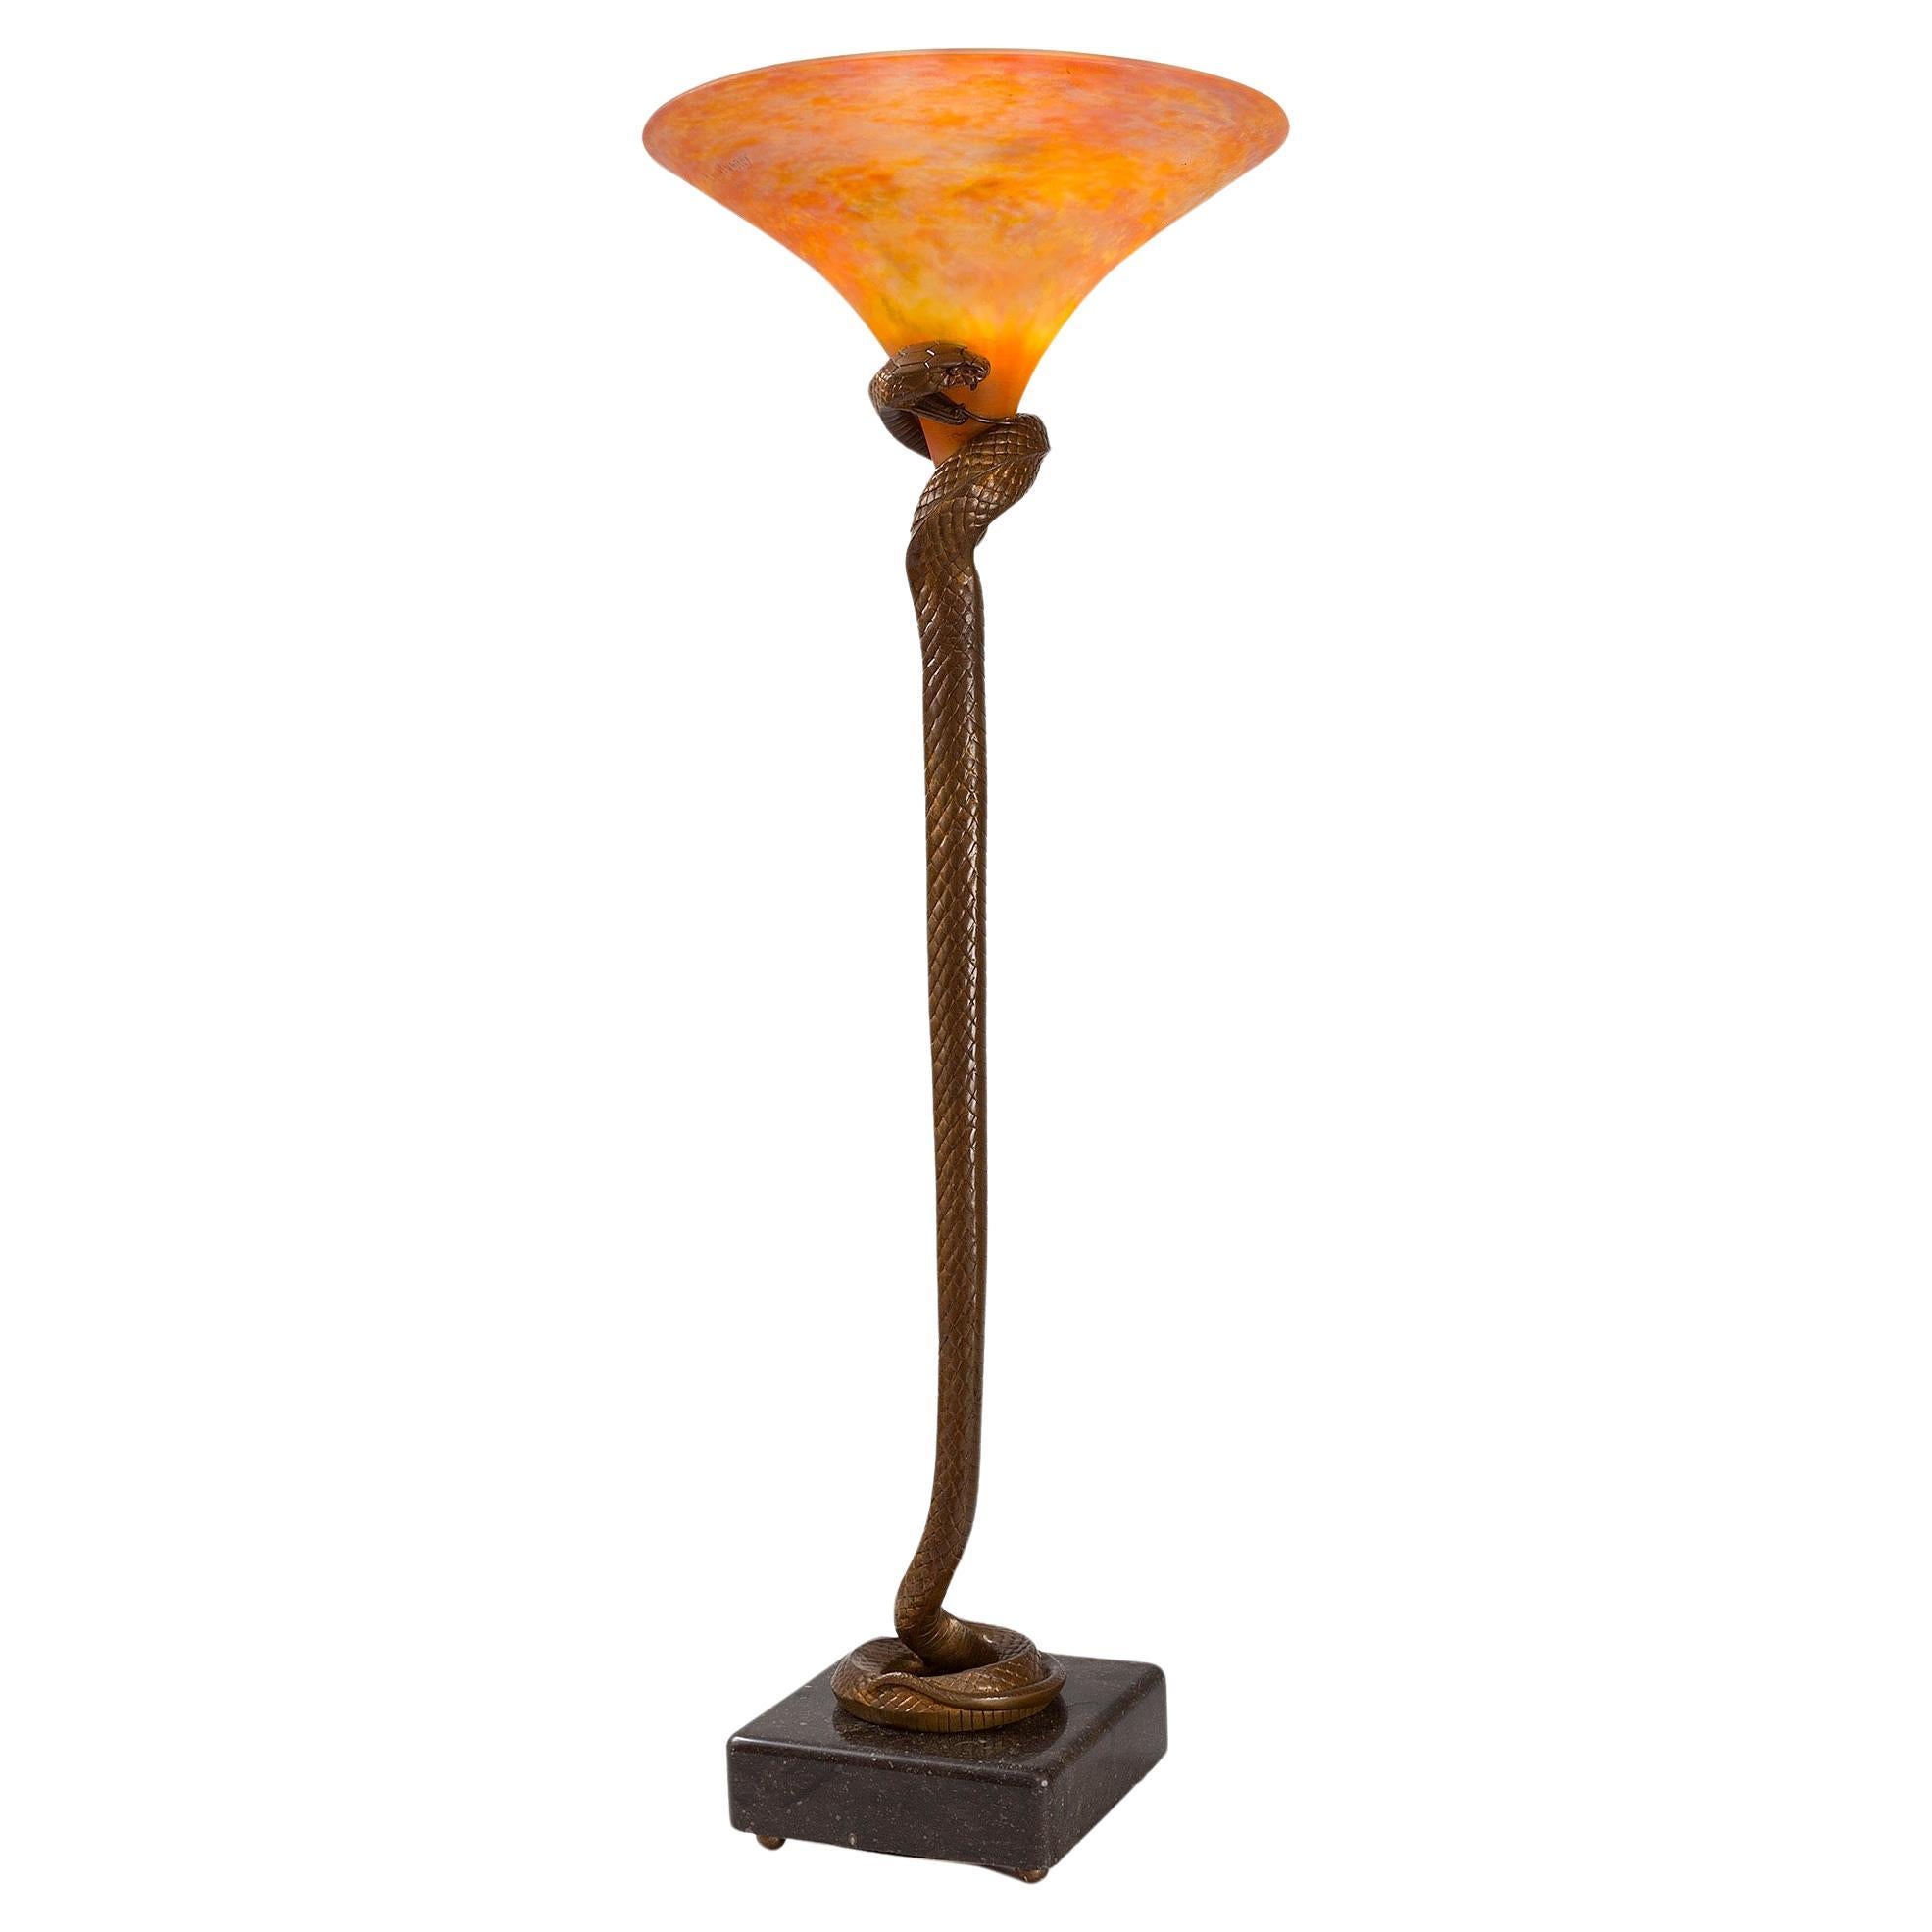 Edgar Brandt and Daum “La Tentation” Table Lamp For Sale